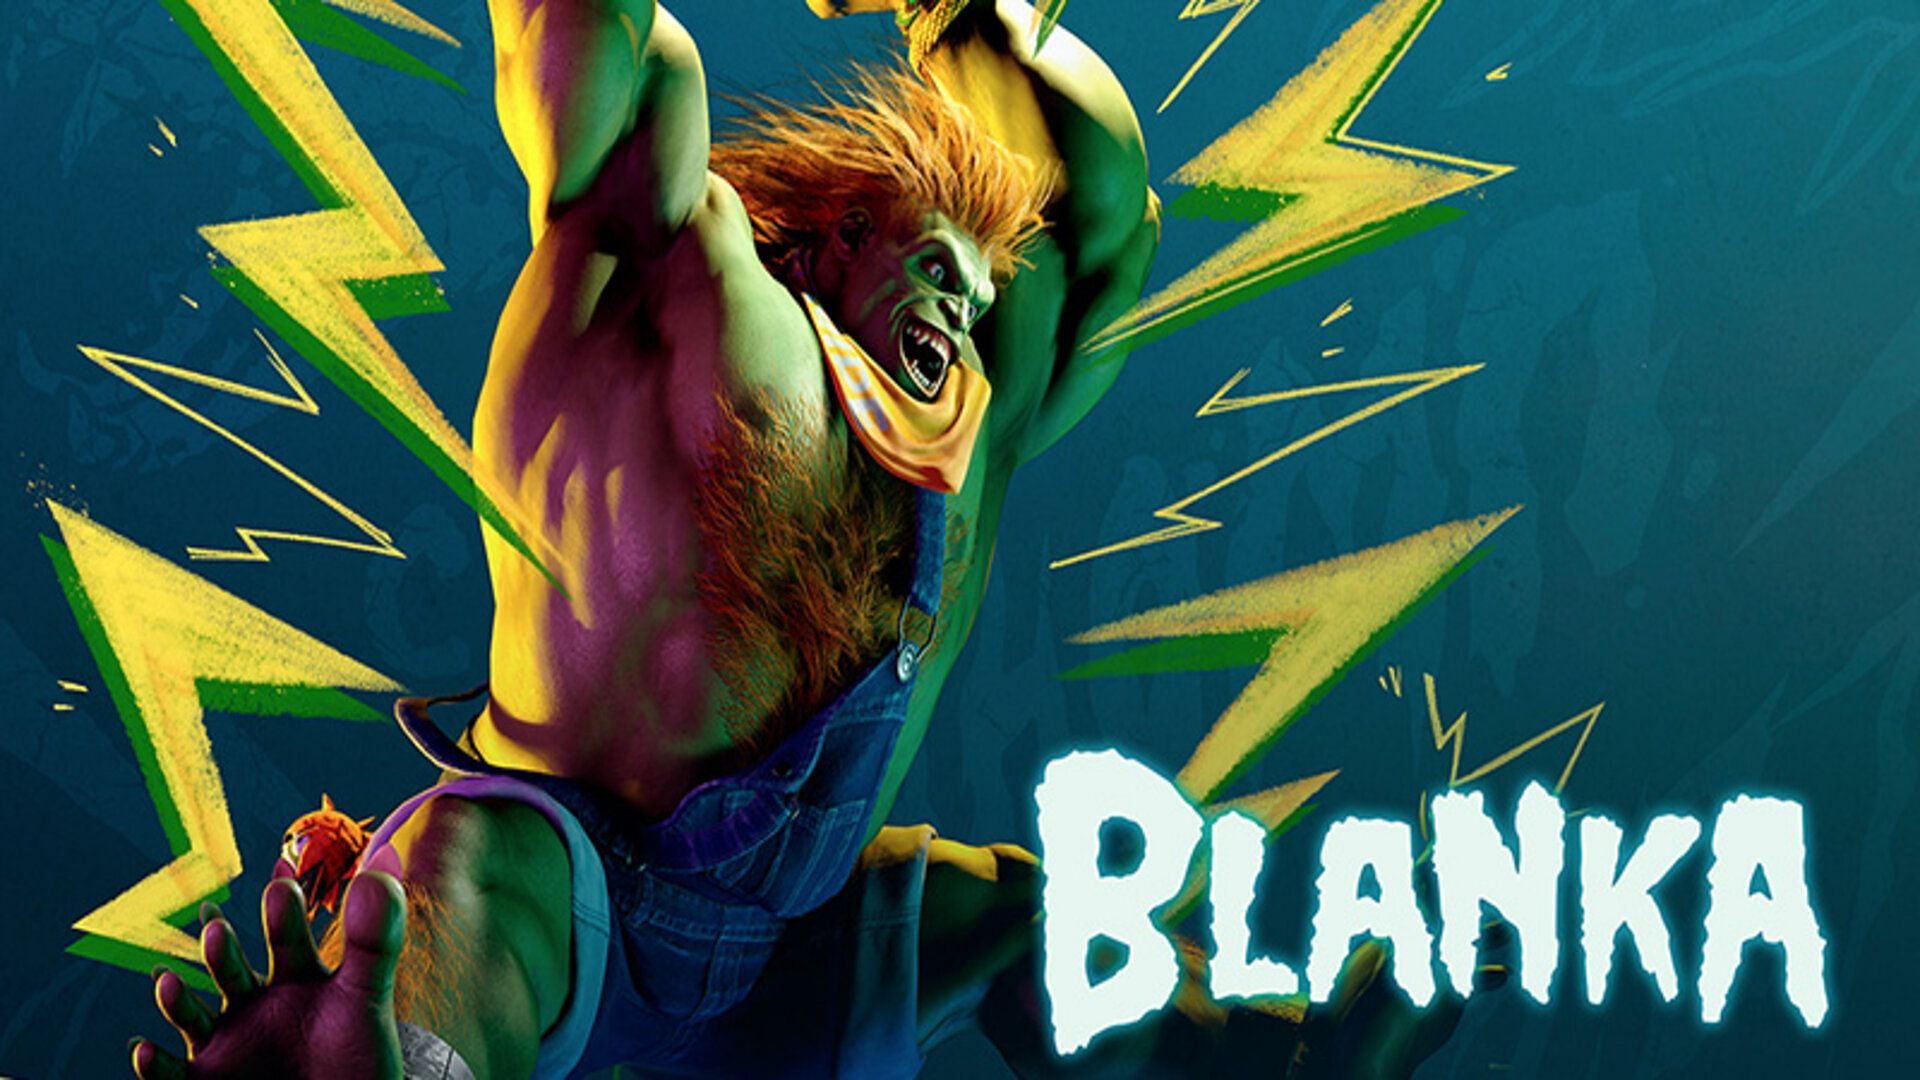 The character that inspired the Blanka-Chan costume is Blanka himself (Image via Capcom)